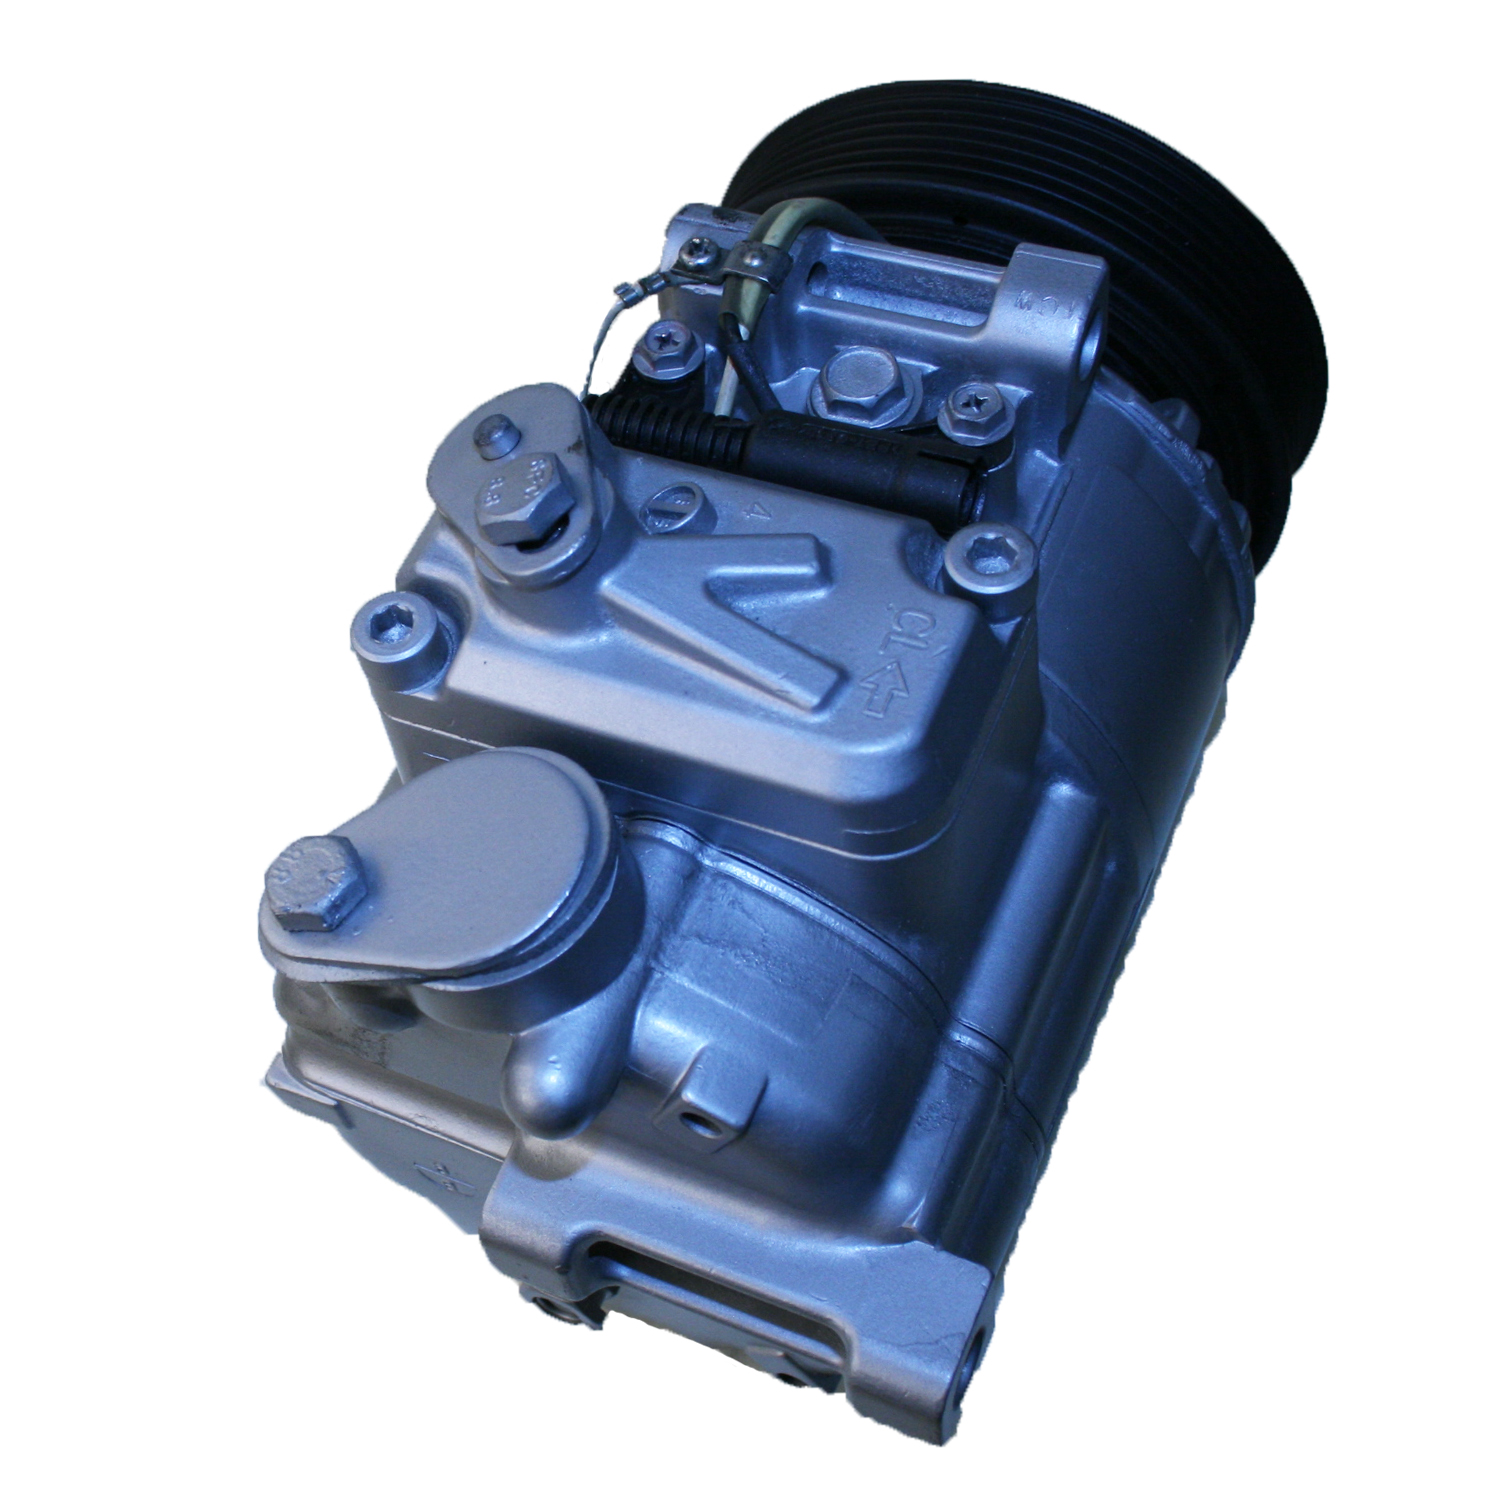 TCW Compressor 41250.6T1 Remanufactured Product Image field_60b6a13a6e67c